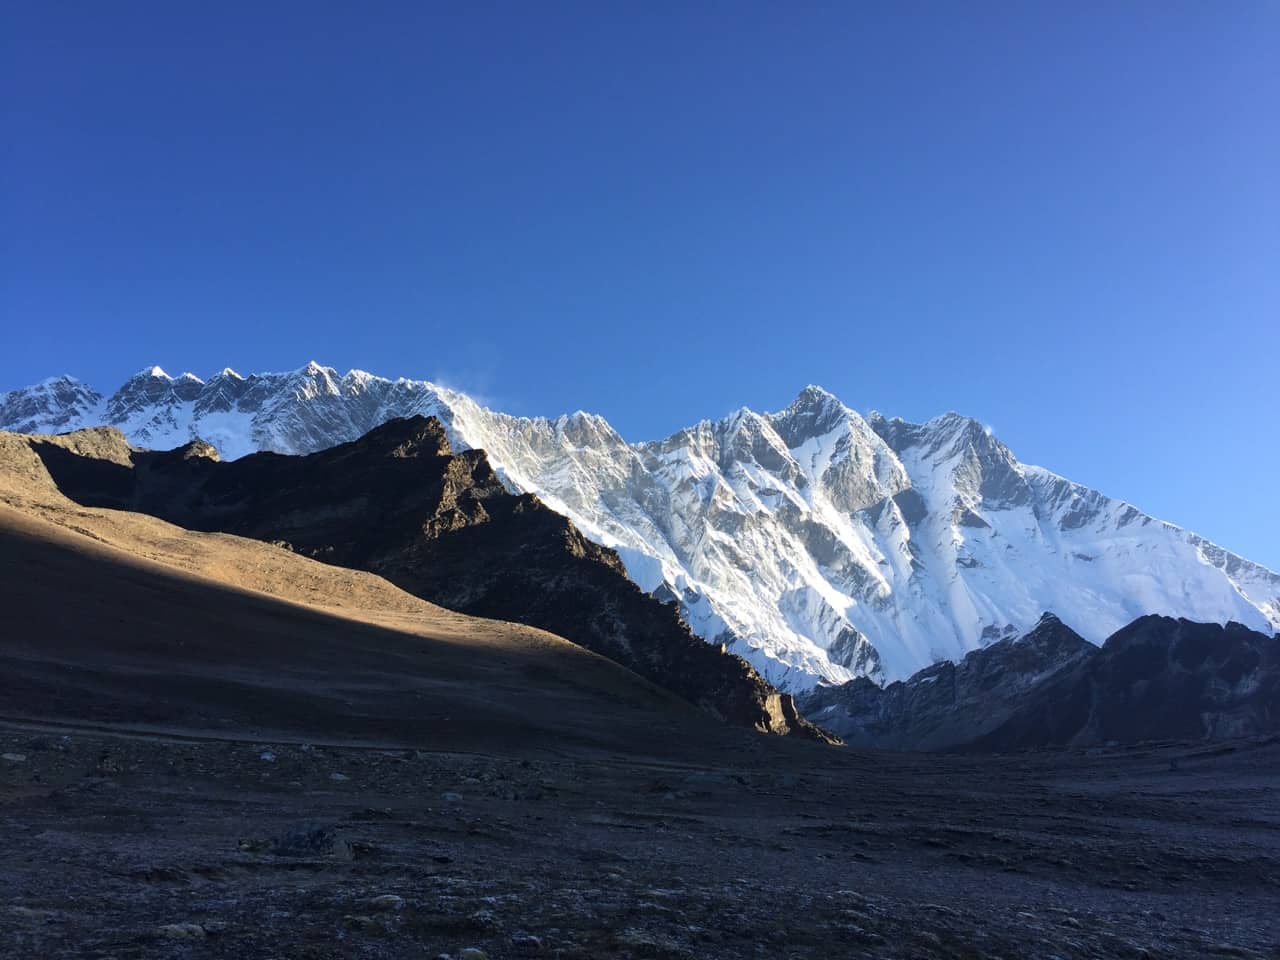 Lhotse Wall seen from the way to Chukung Ri